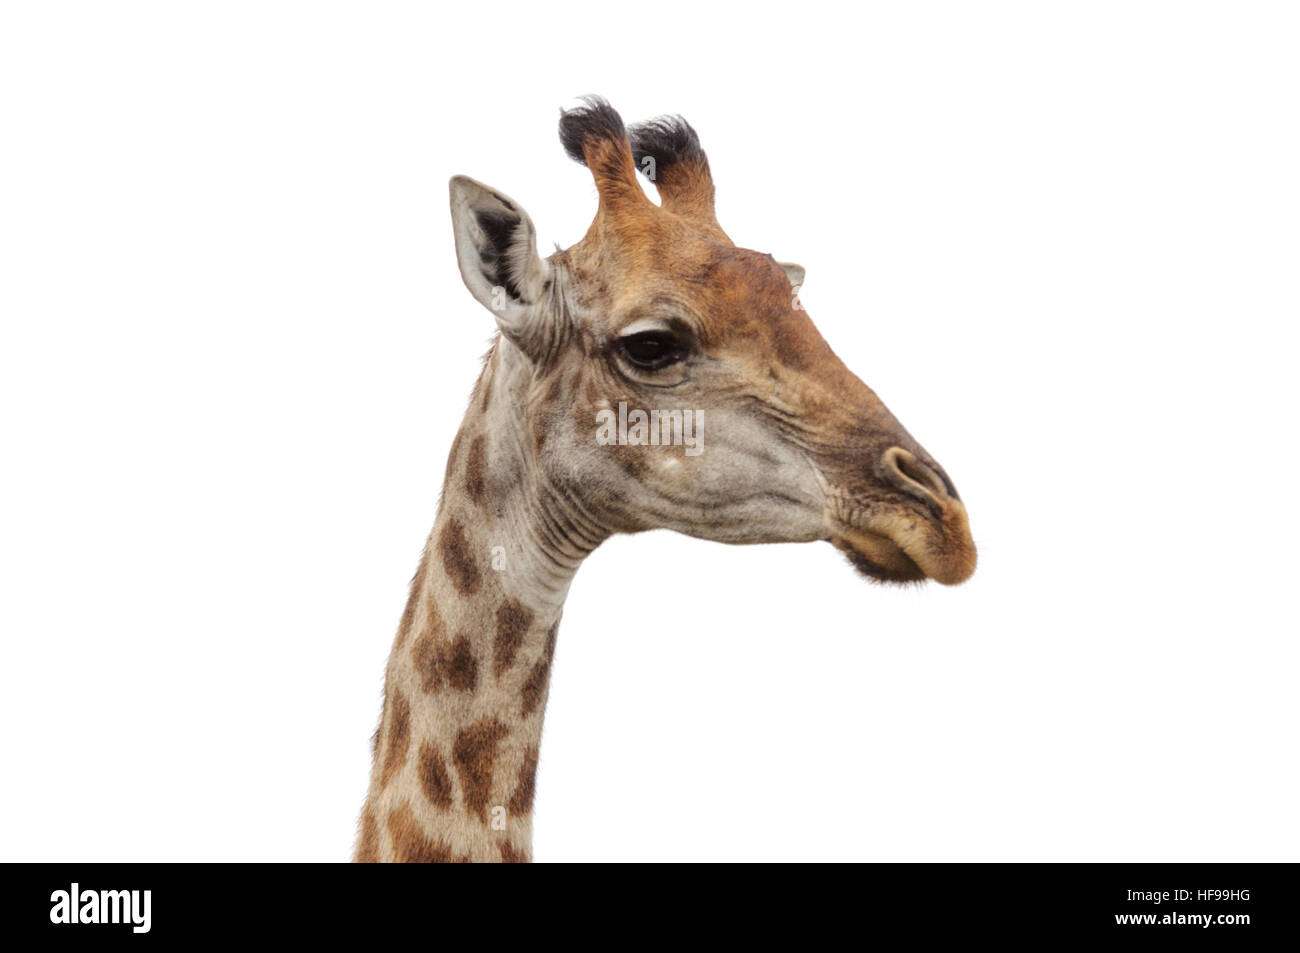 Close-up portrait of a South African Girafe (Giraffa giraffa giraffa), également connu sous le nom de la girafe Banque D'Images